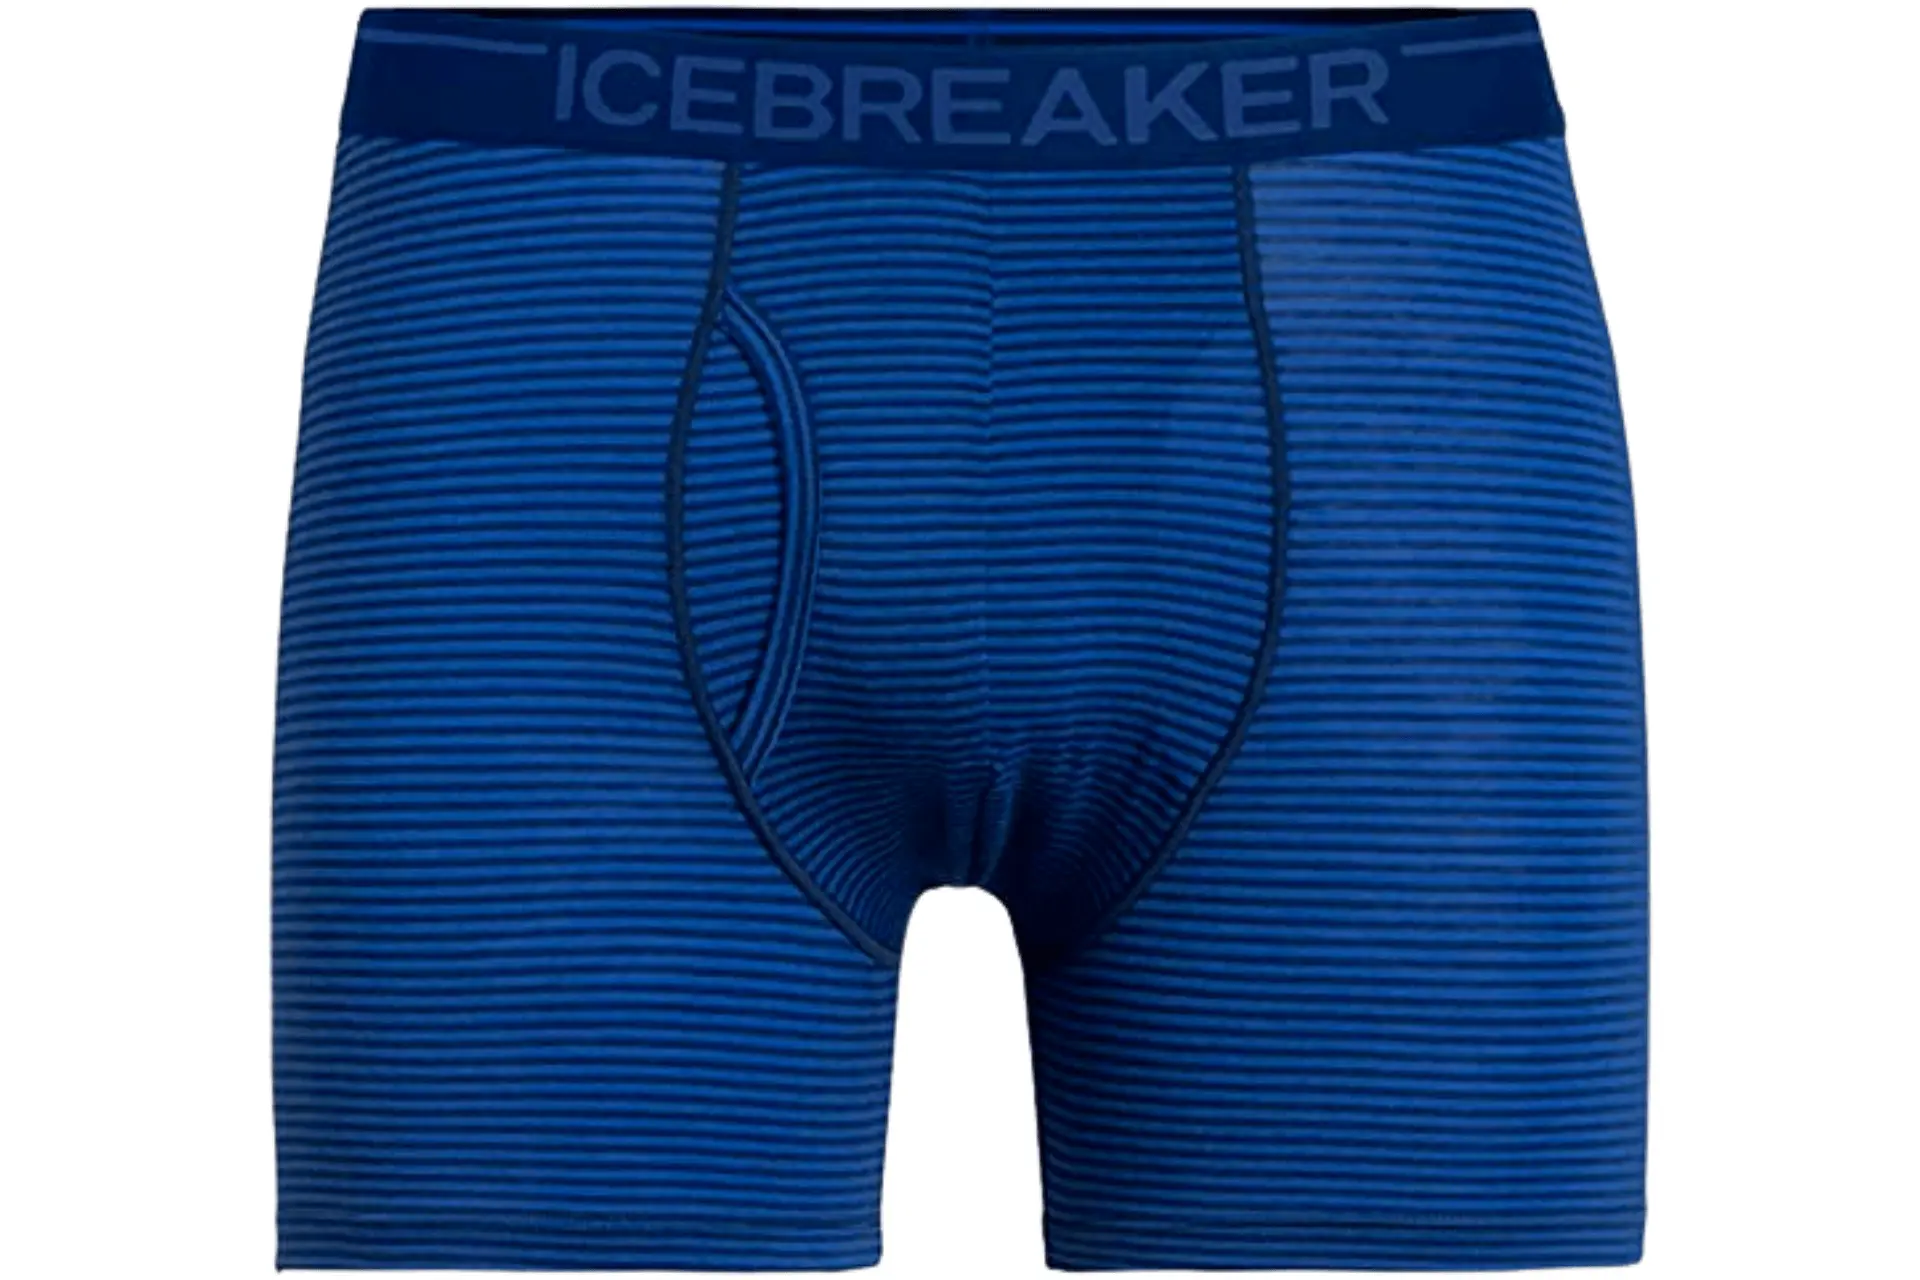 Icebreaker Merino Men's